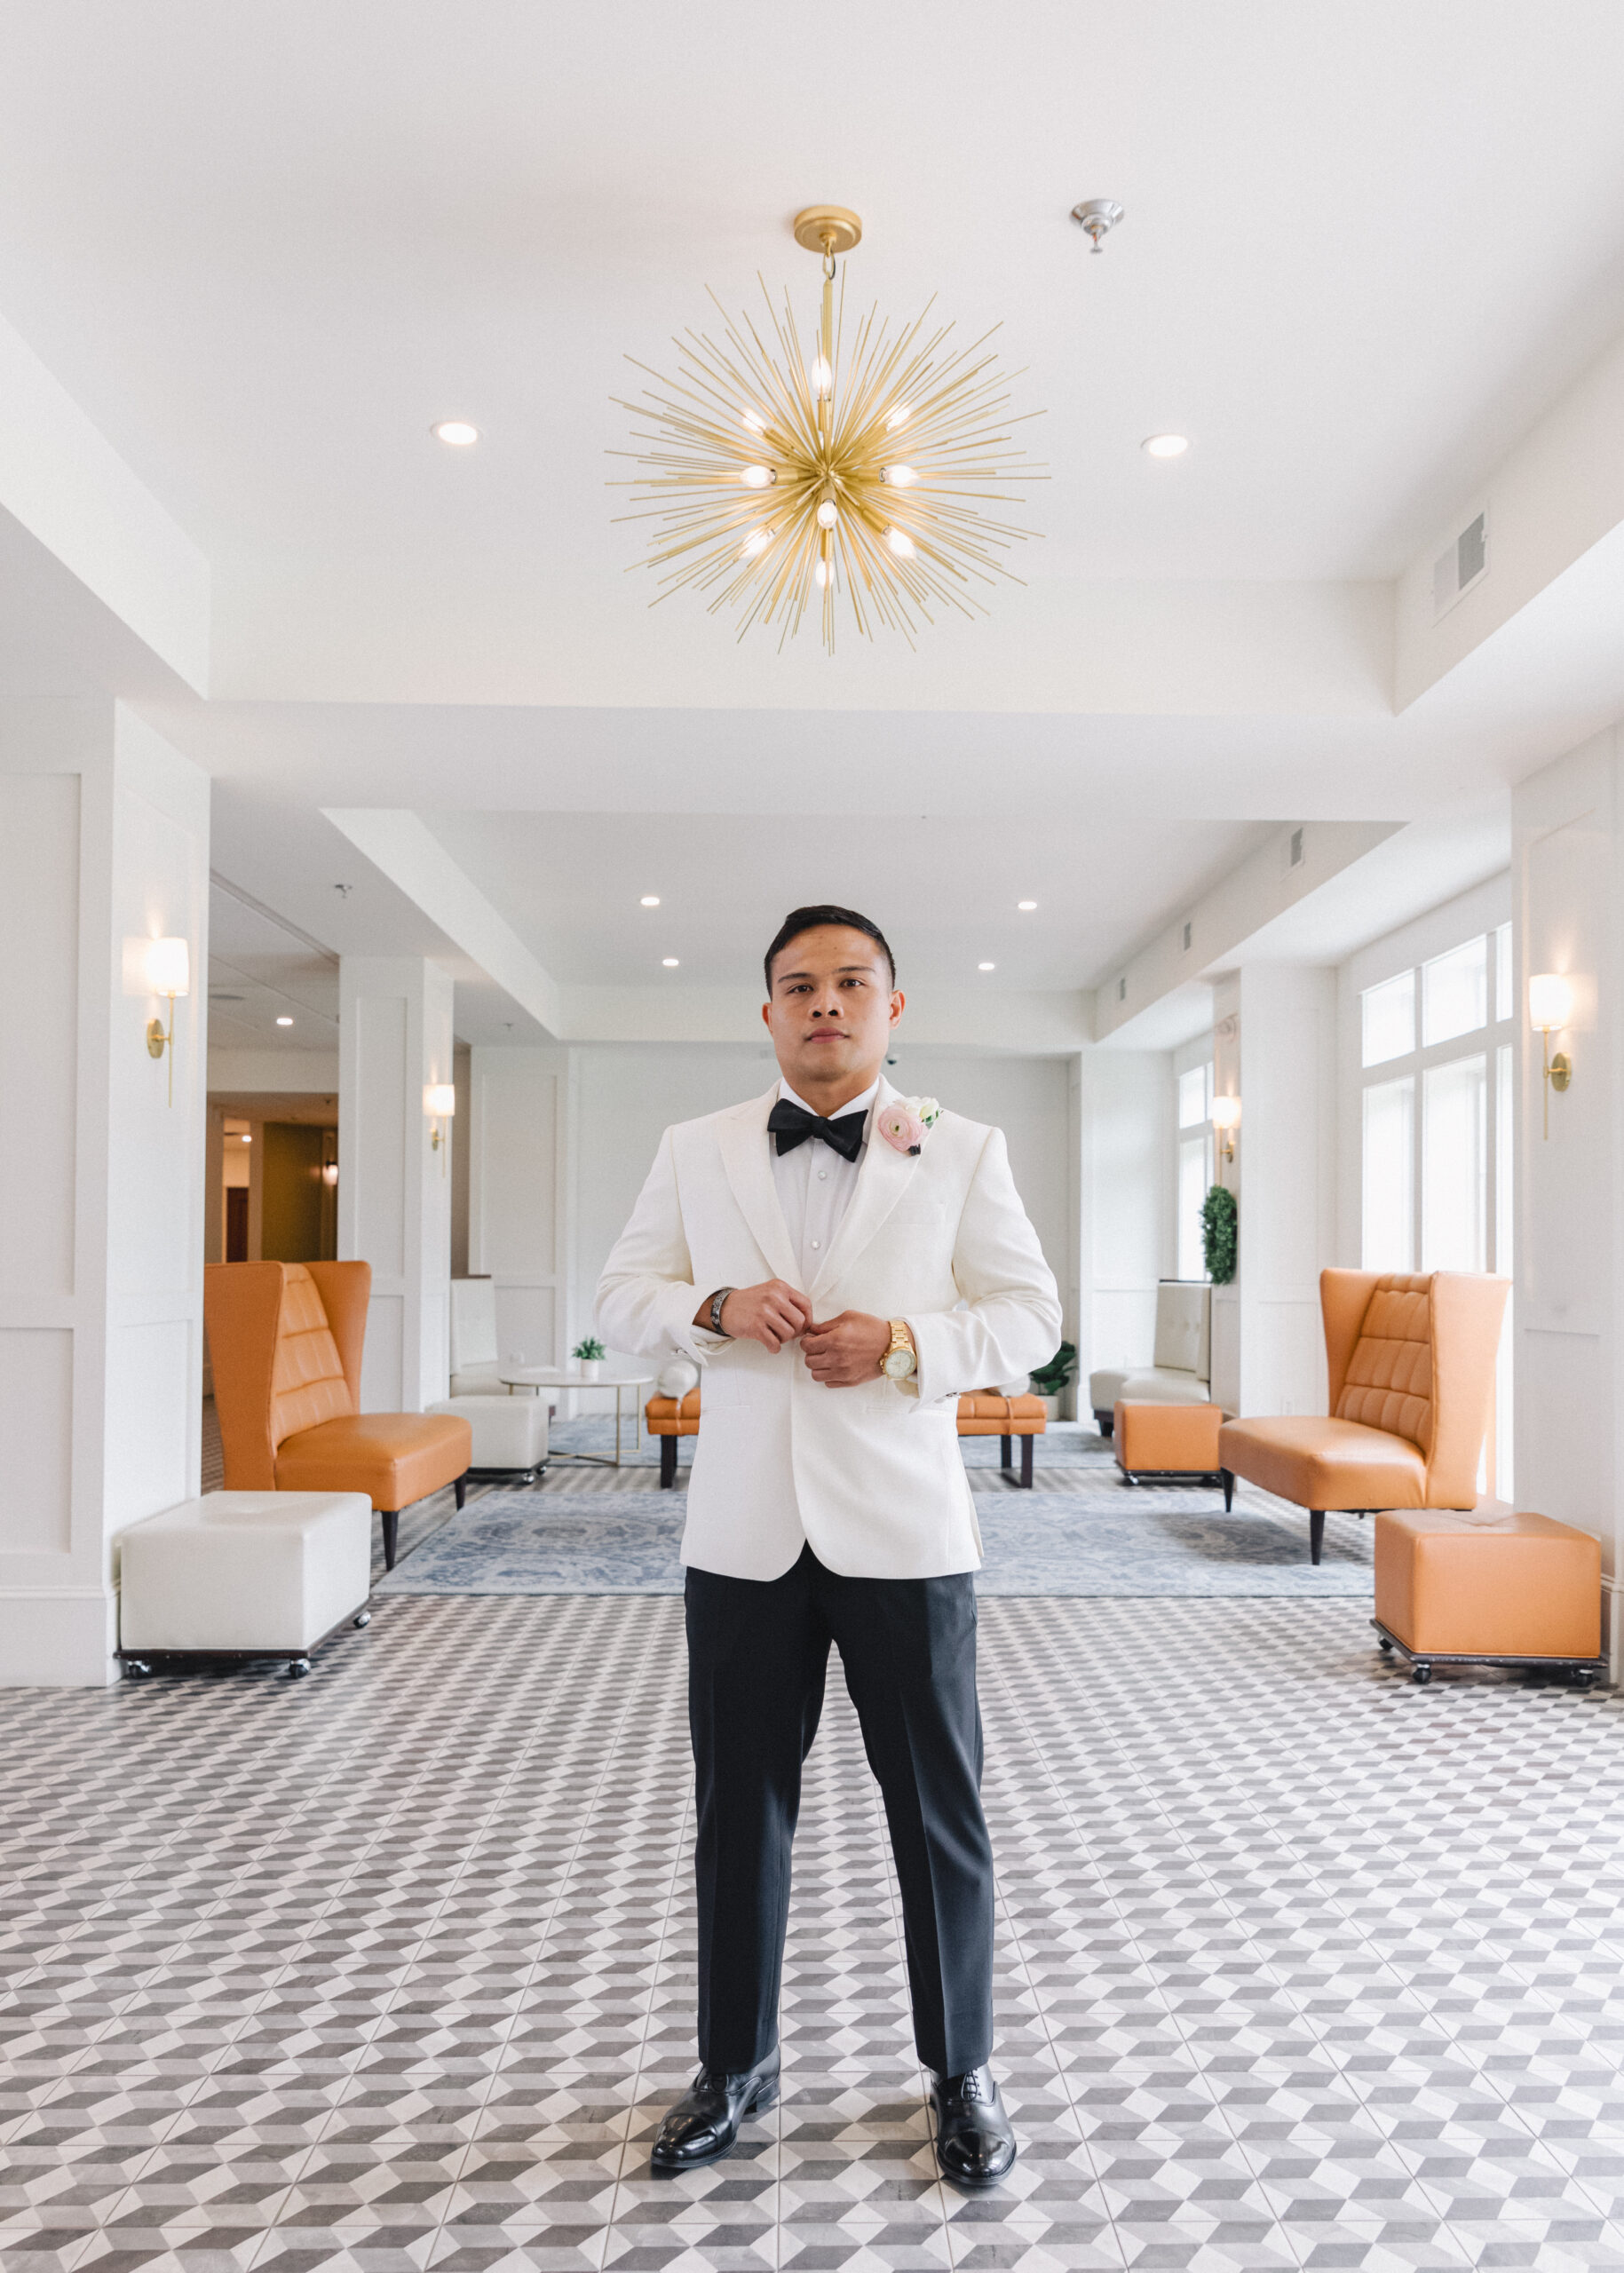 groom buttoning jacket in modern hotel foyer